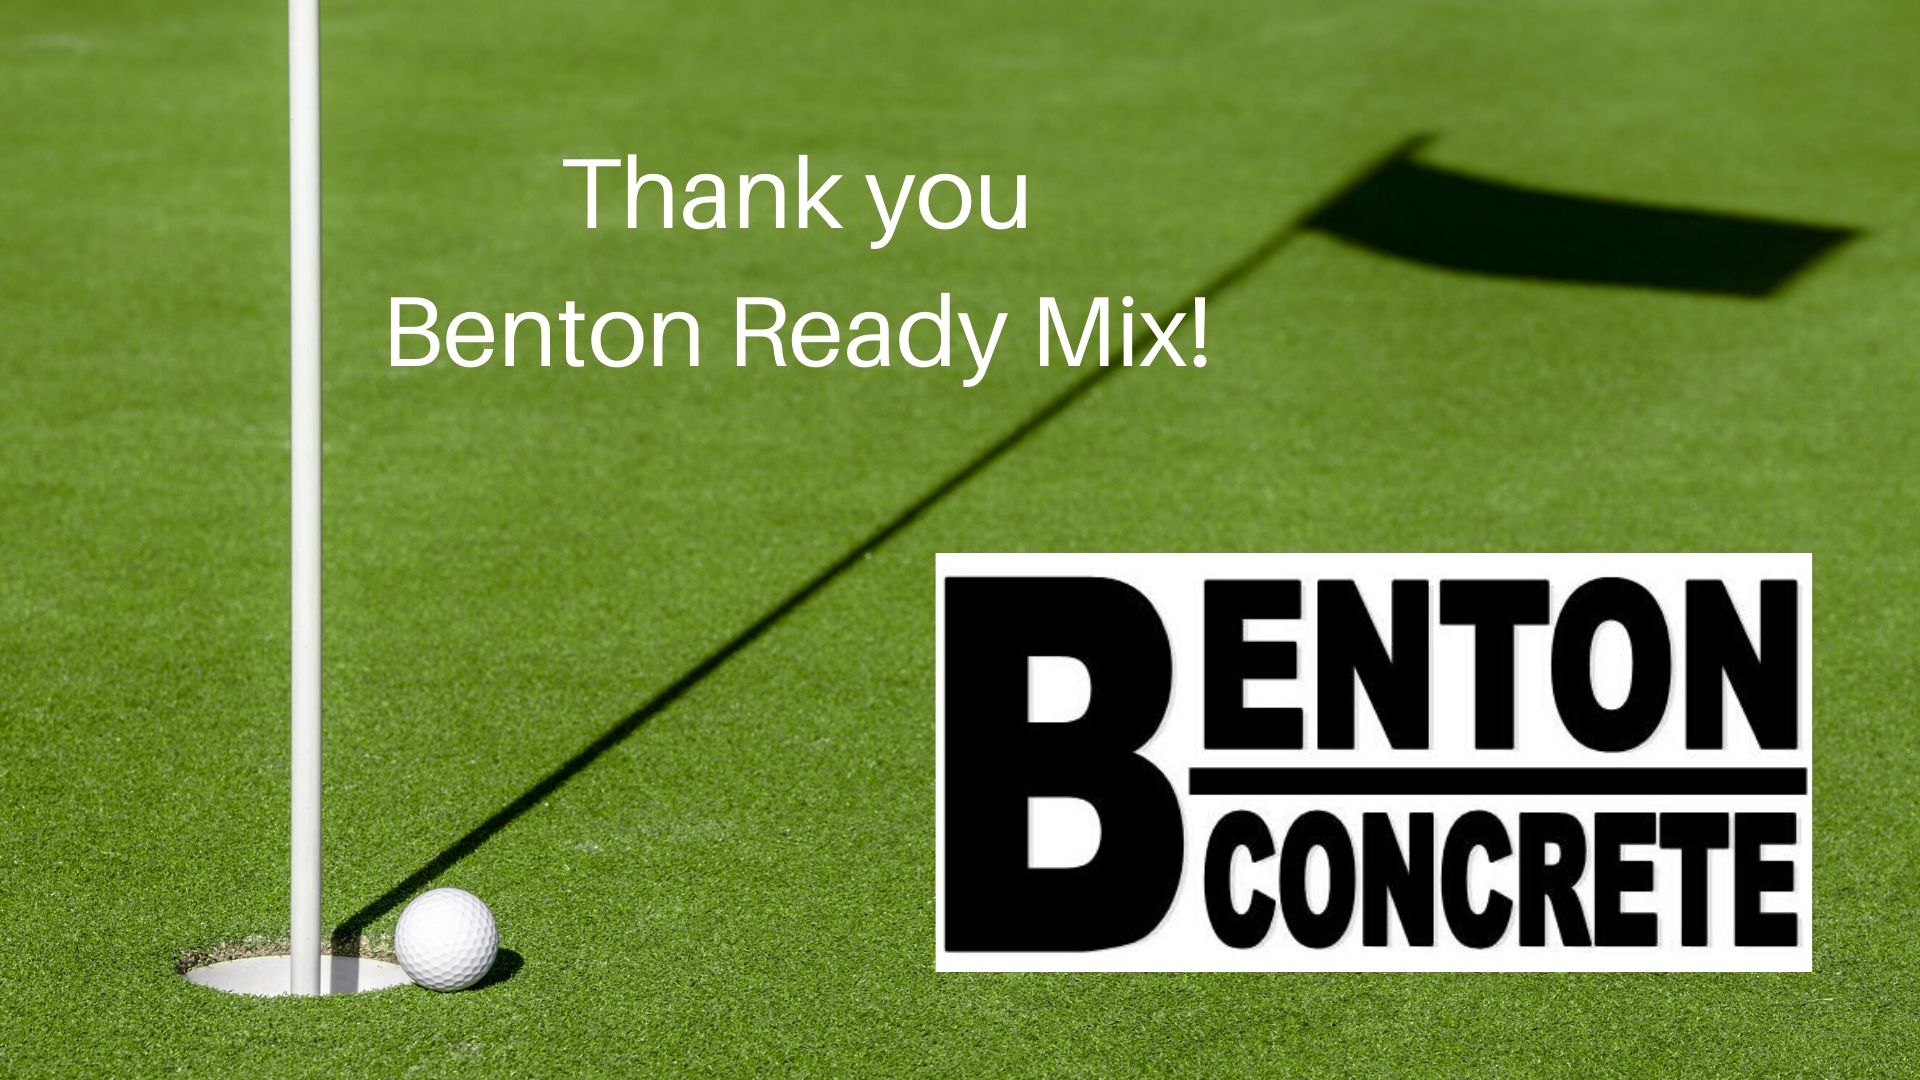 Benton Ready Mix